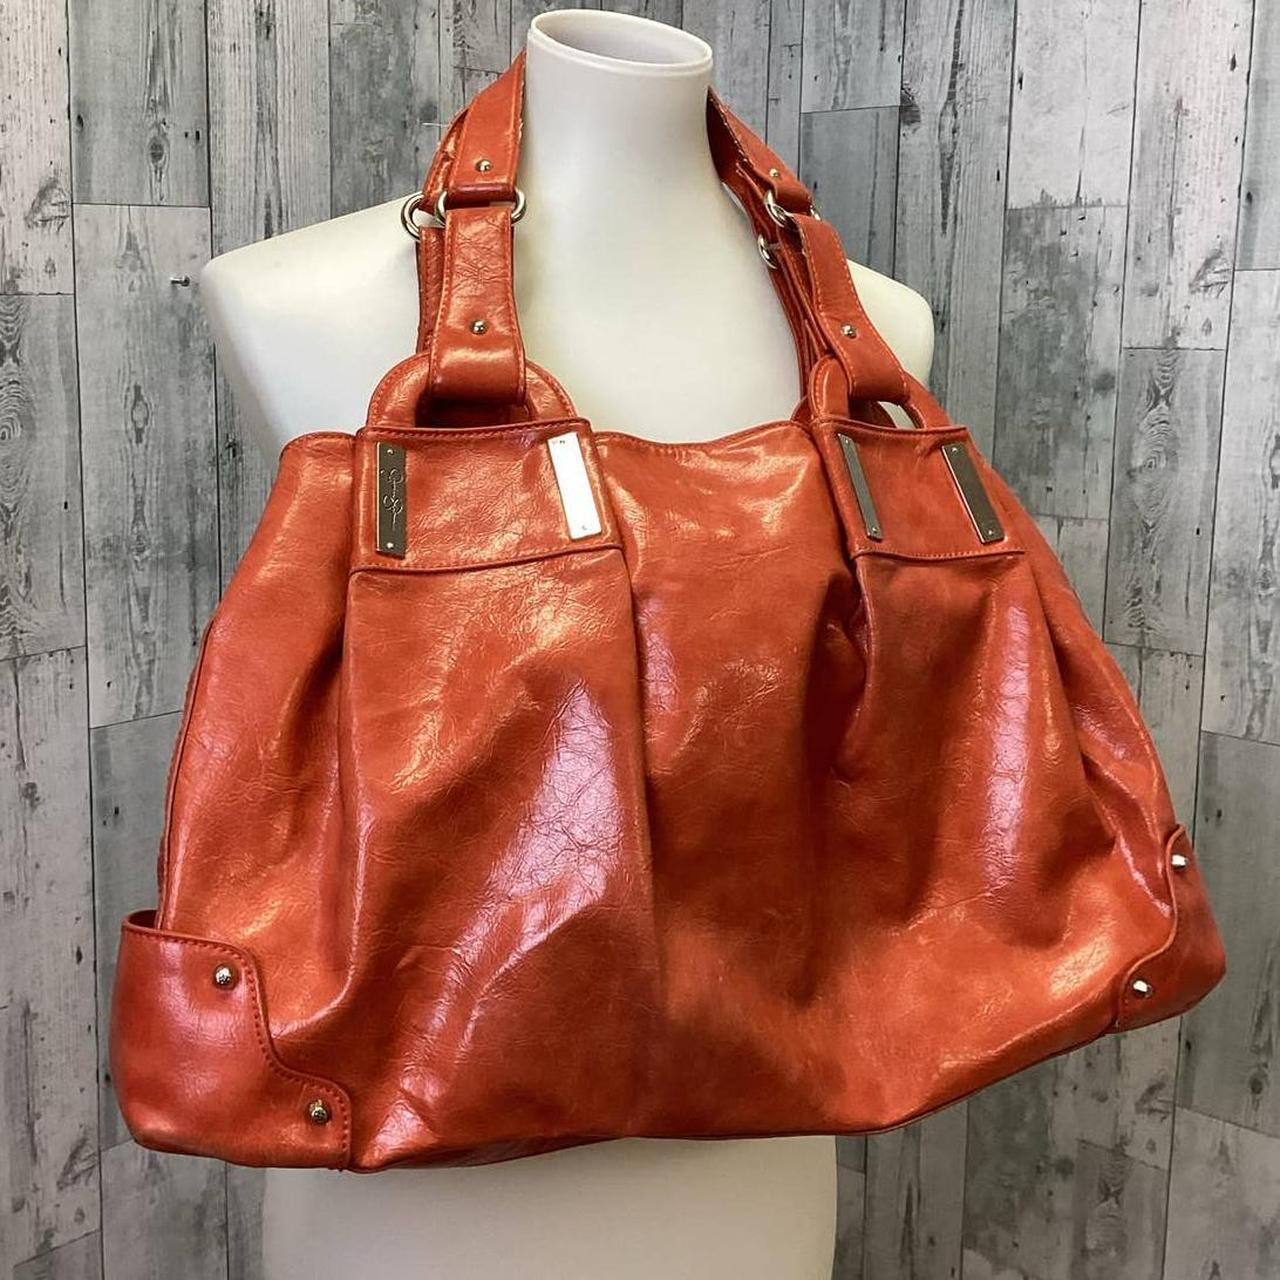 Jessica Simpson Silver Shoulder Bags for Women | Mercari